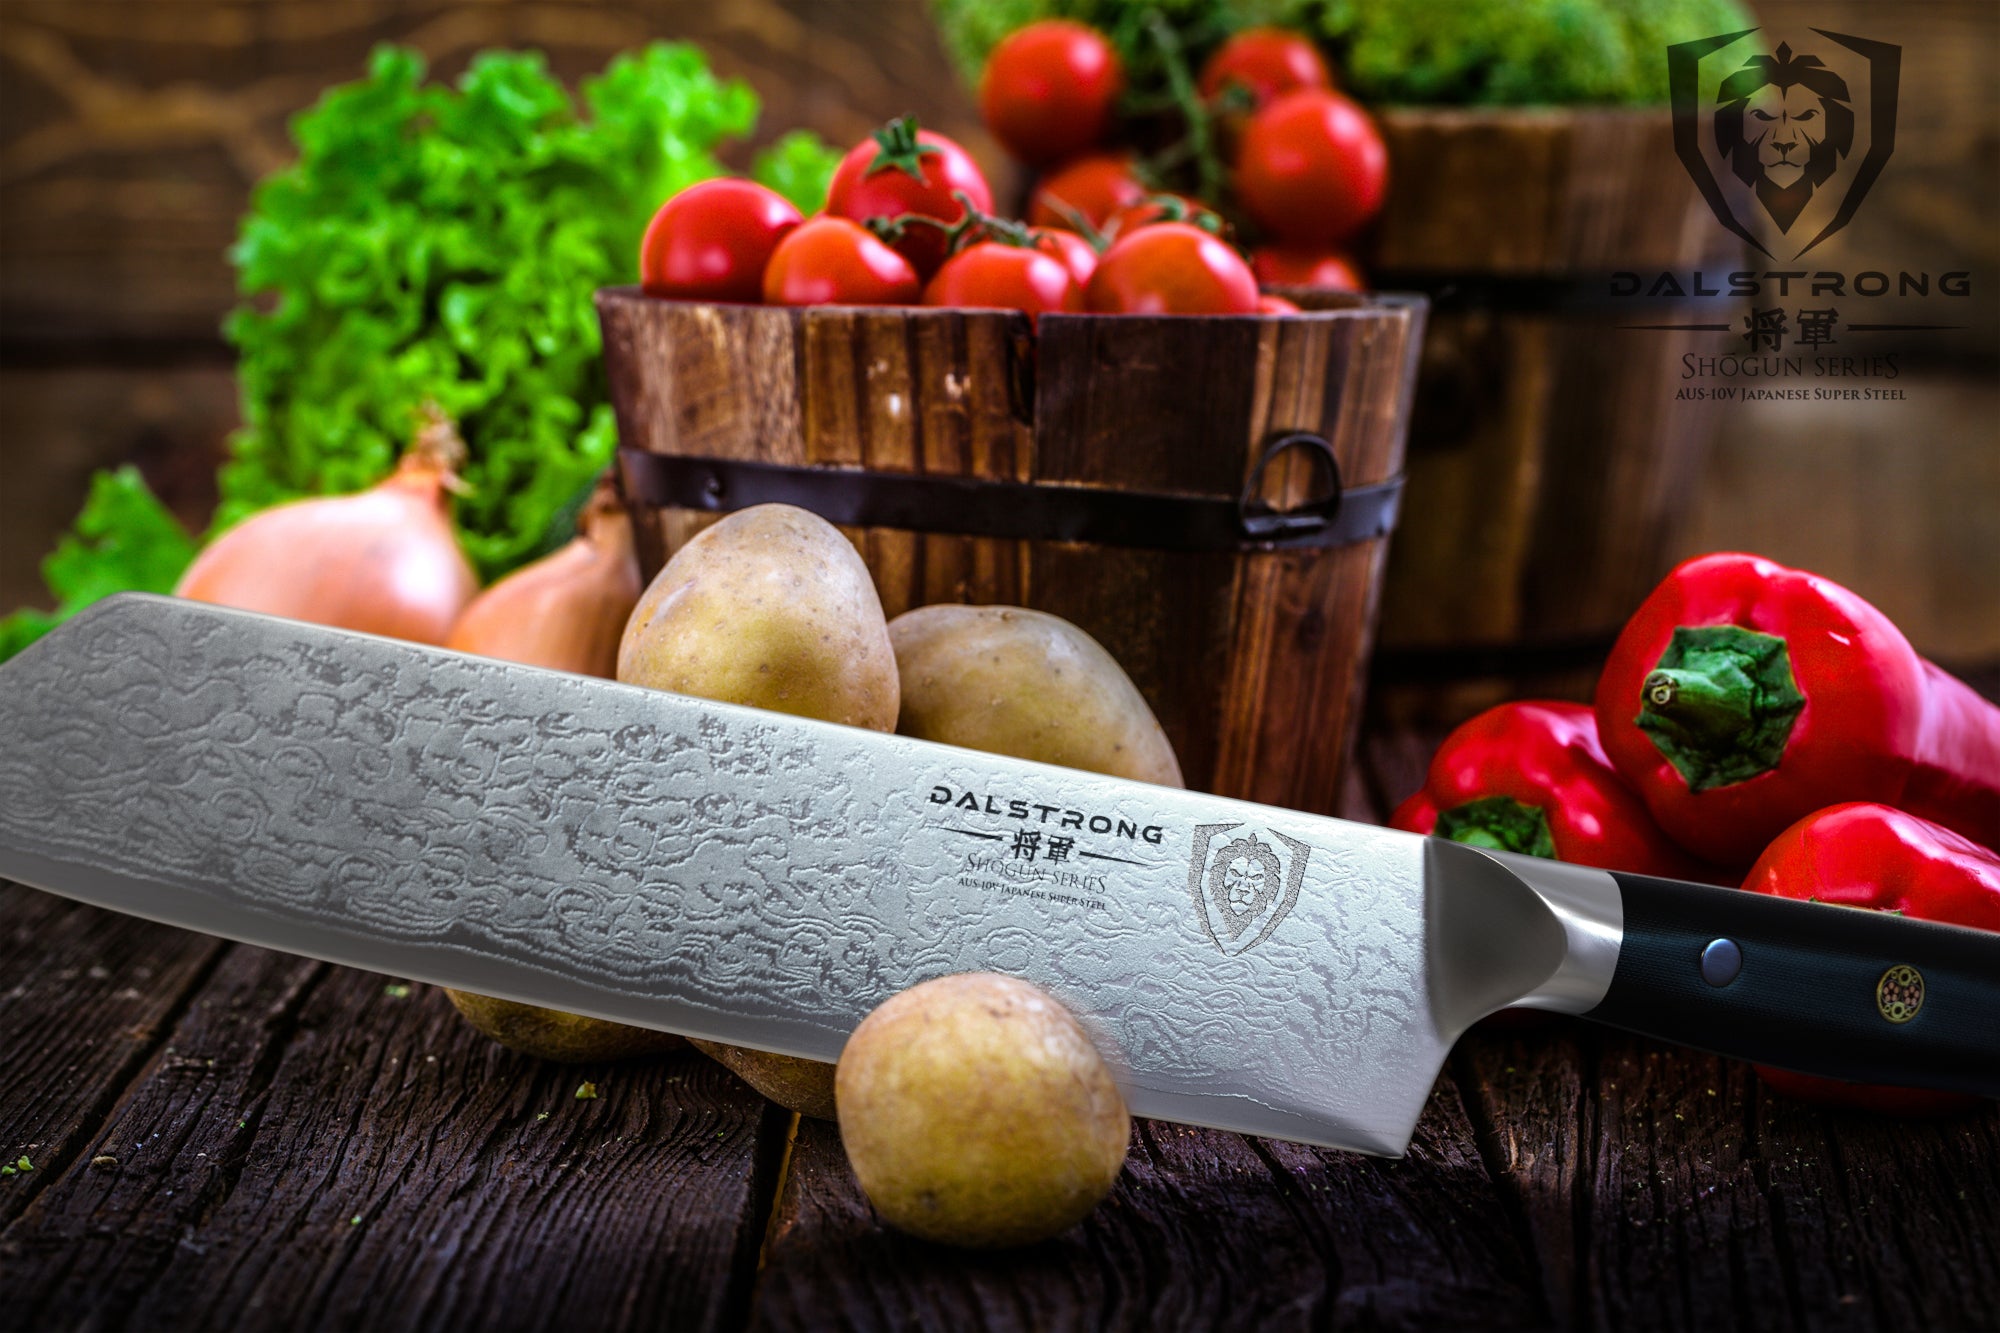 9 Fishing Knife Professional Japanese Chef Knife Forged Kiritsuke